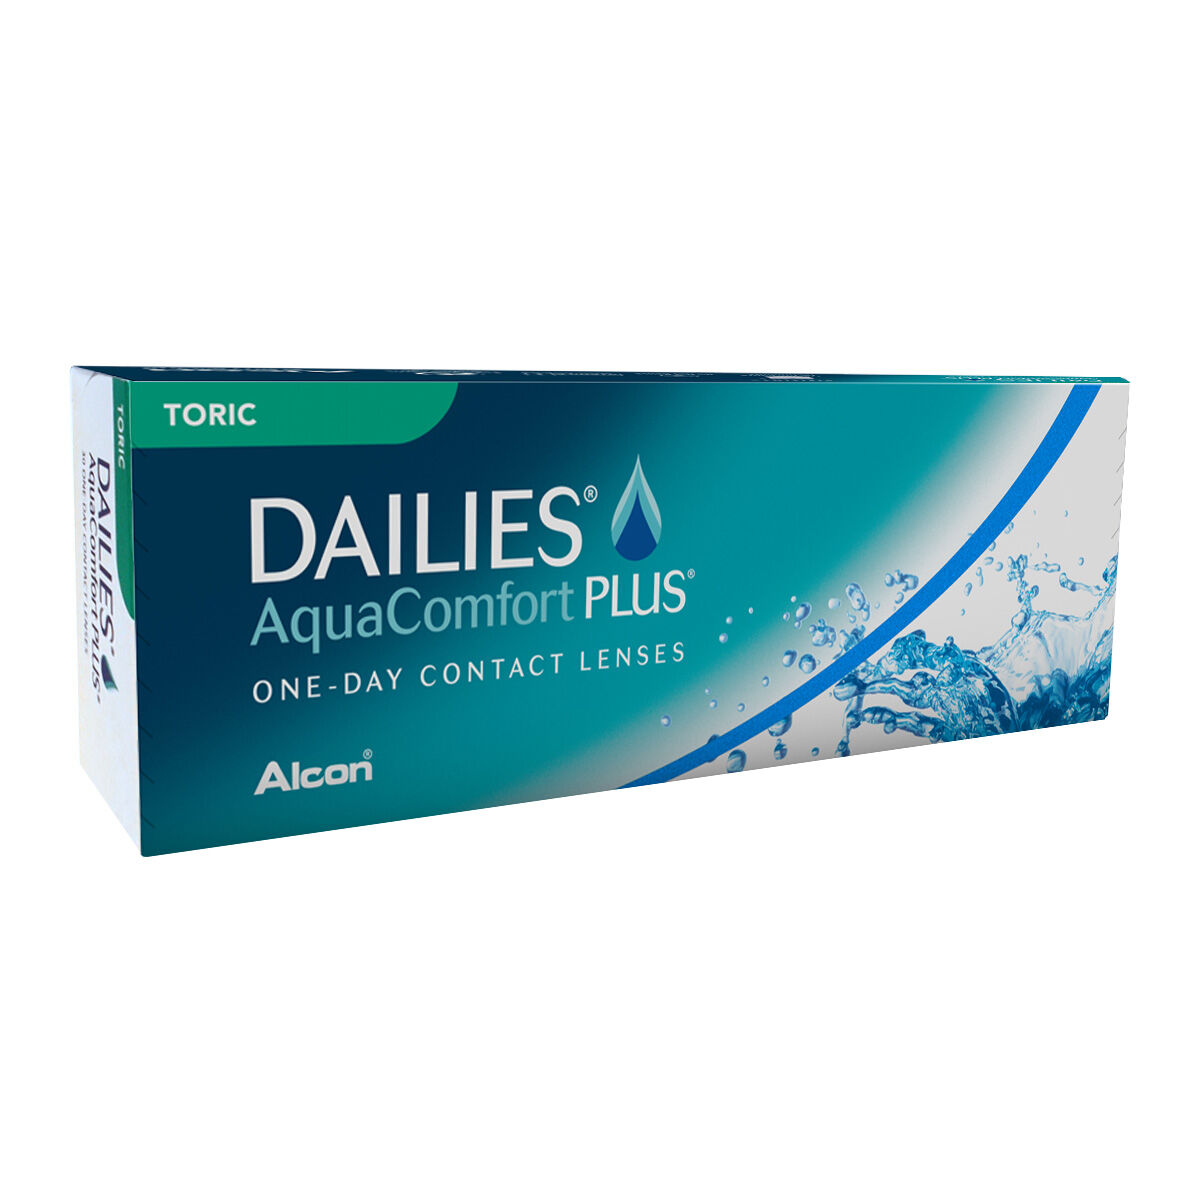 Alcon Dailies Aqua Comfort Plus Toric (30 Contact Lenses), Ciba Vision/Alcon, Toric Daily Lenses, Nelfilcon A